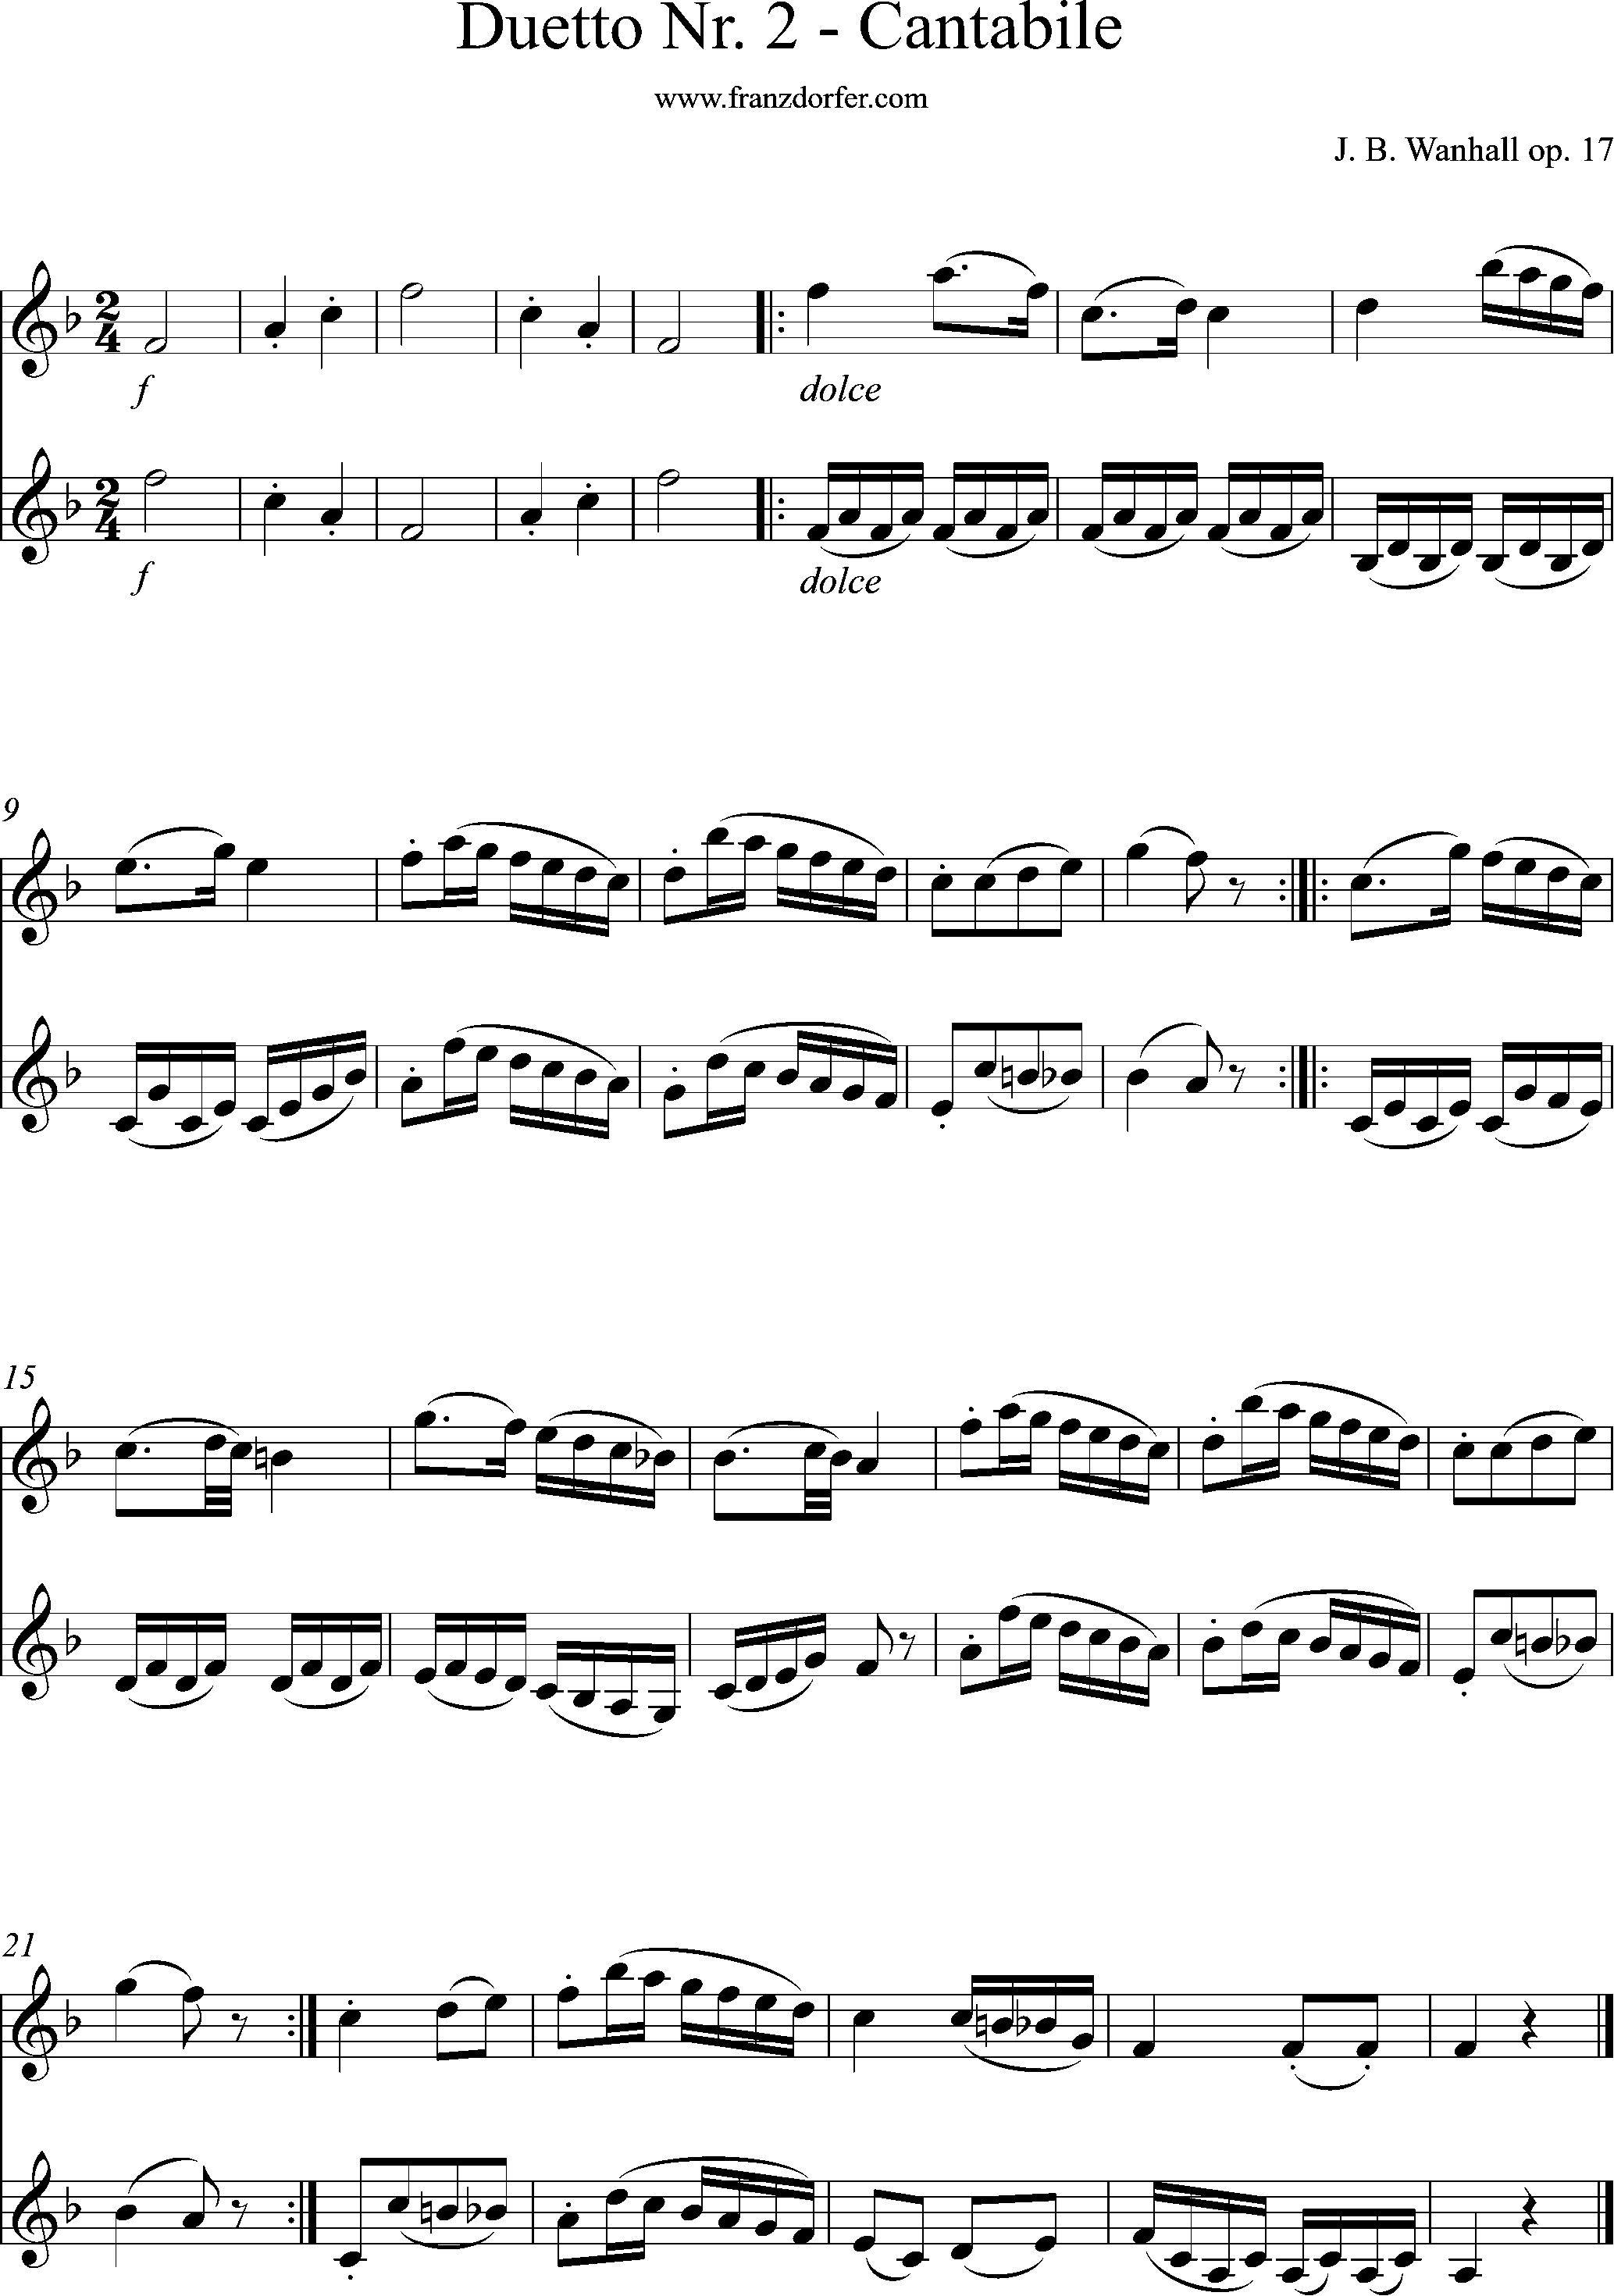 J. B. Vanhal, op. 17, No. 2, Cantabile, sheetmusic